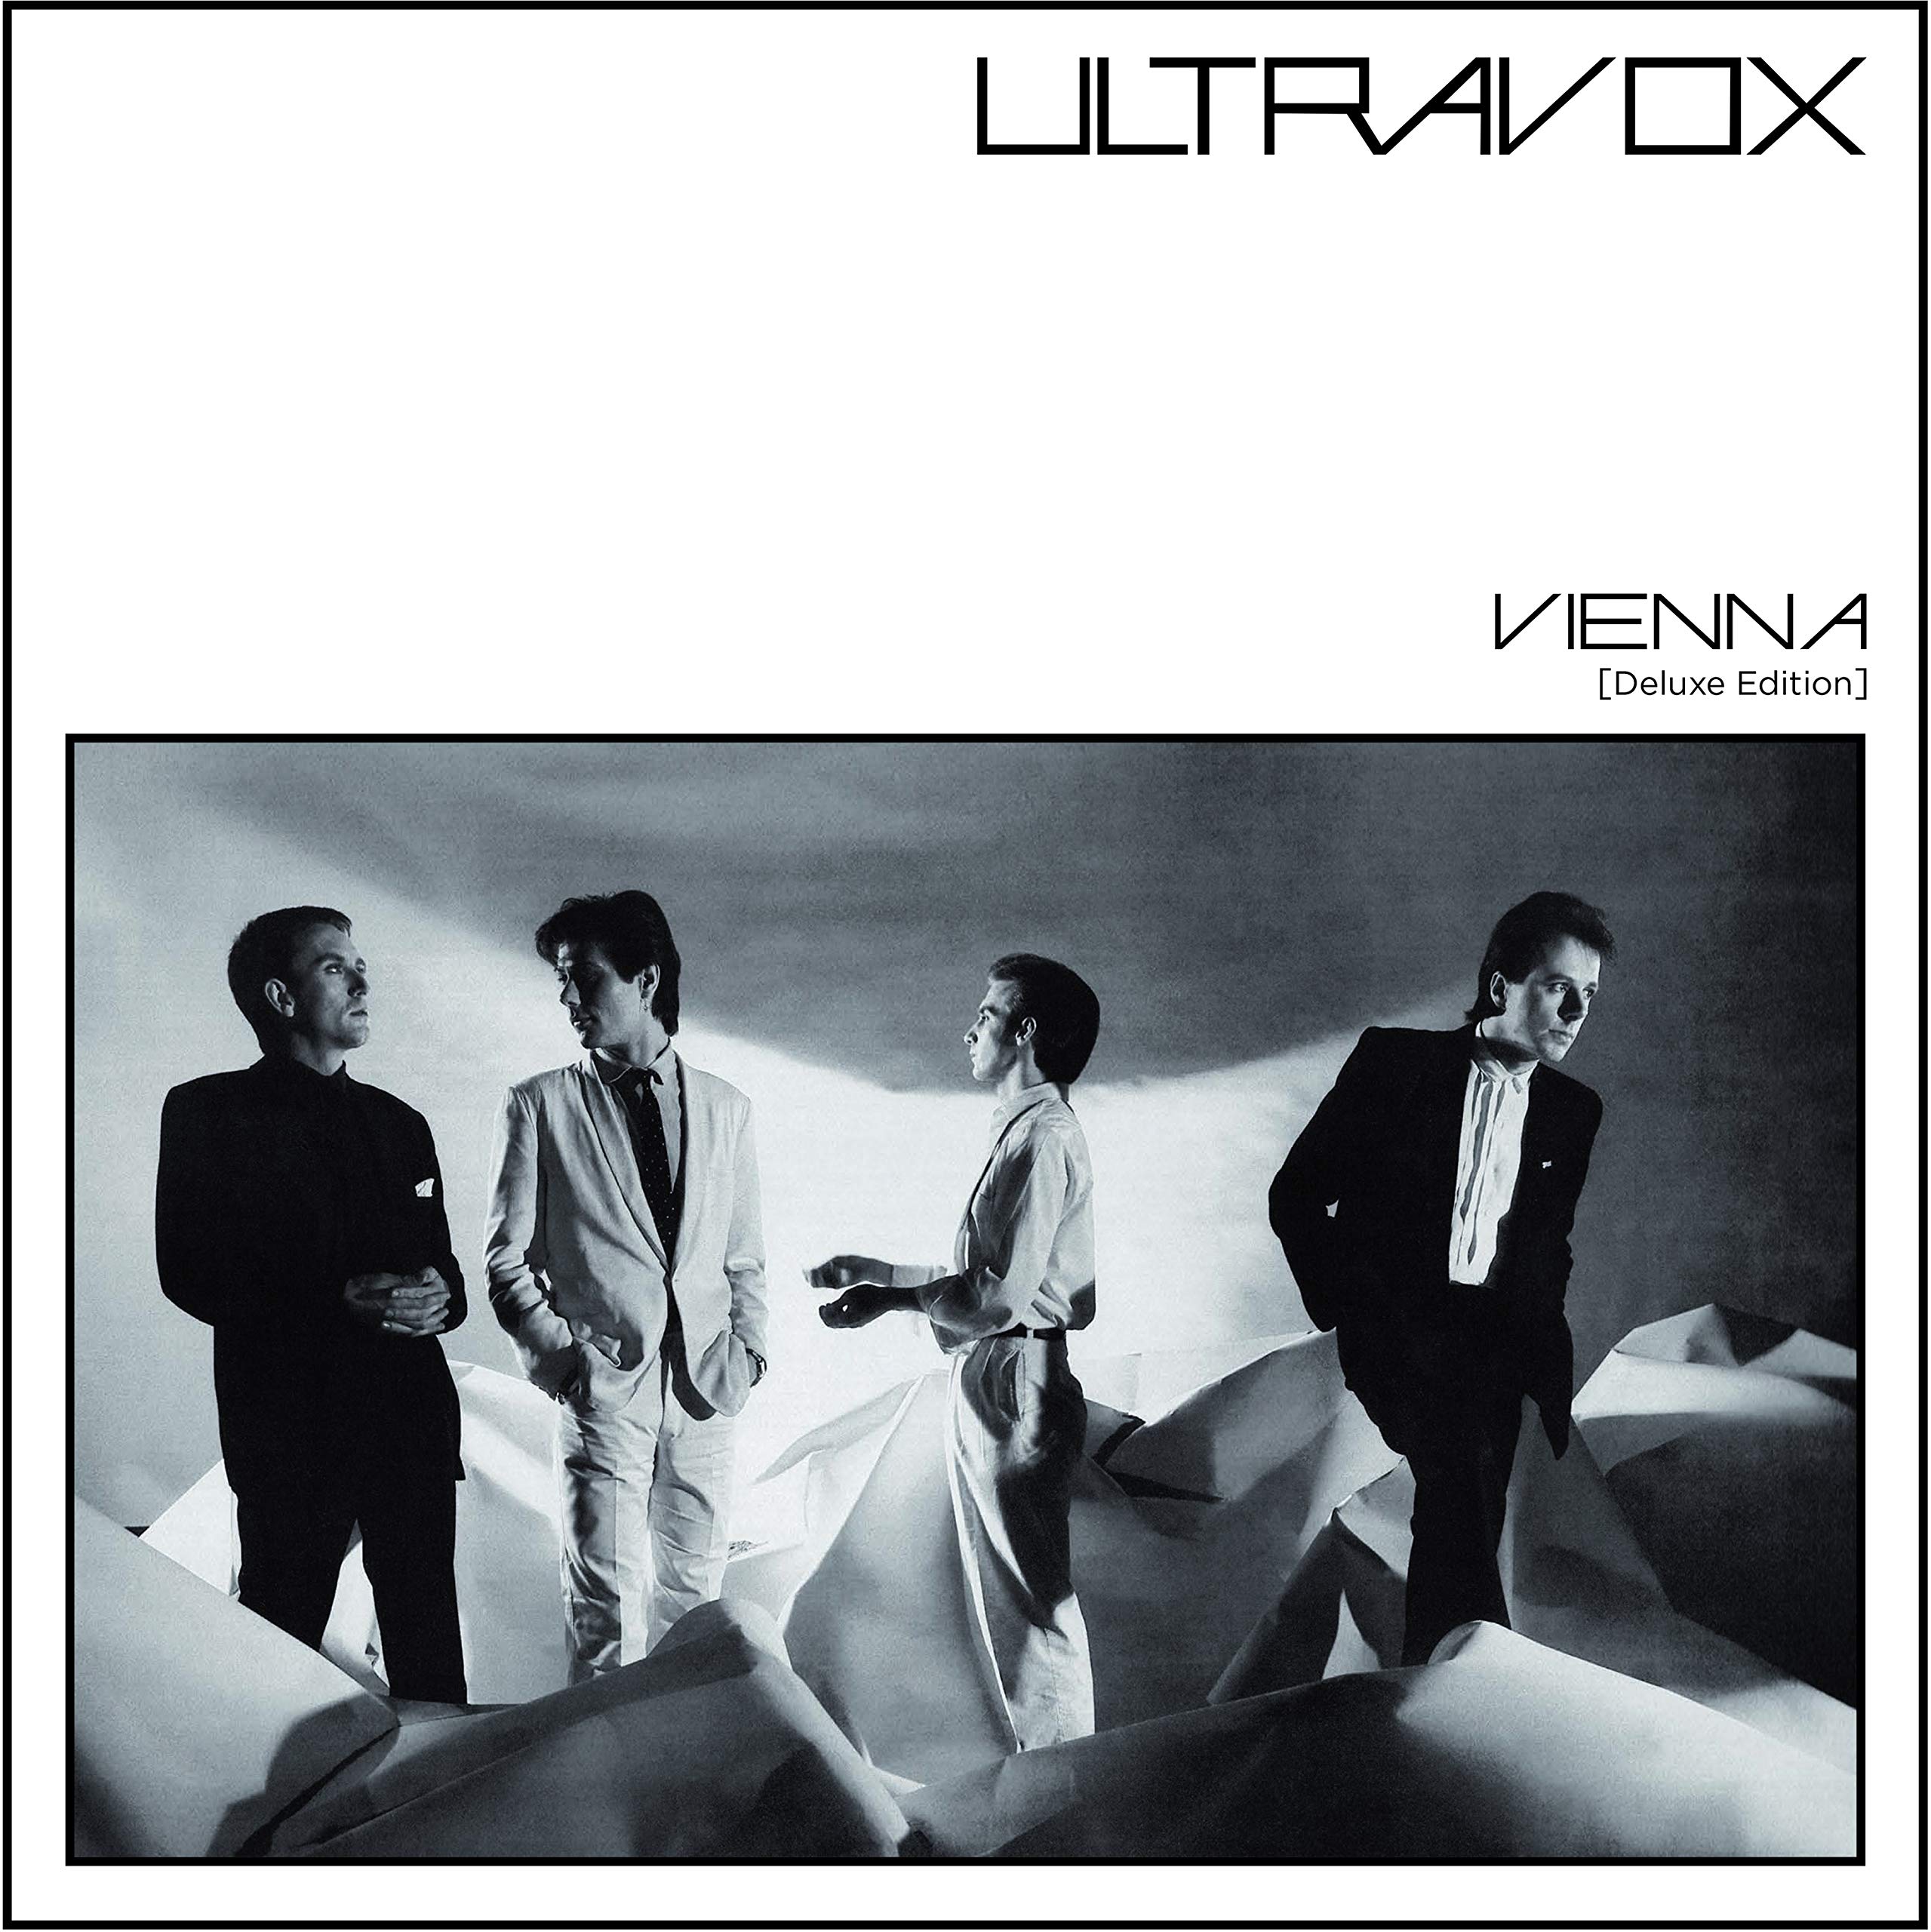 Ultravox-Vienna-Deluxe Edition Boxset-DVDA-FLAC-2020-D2H